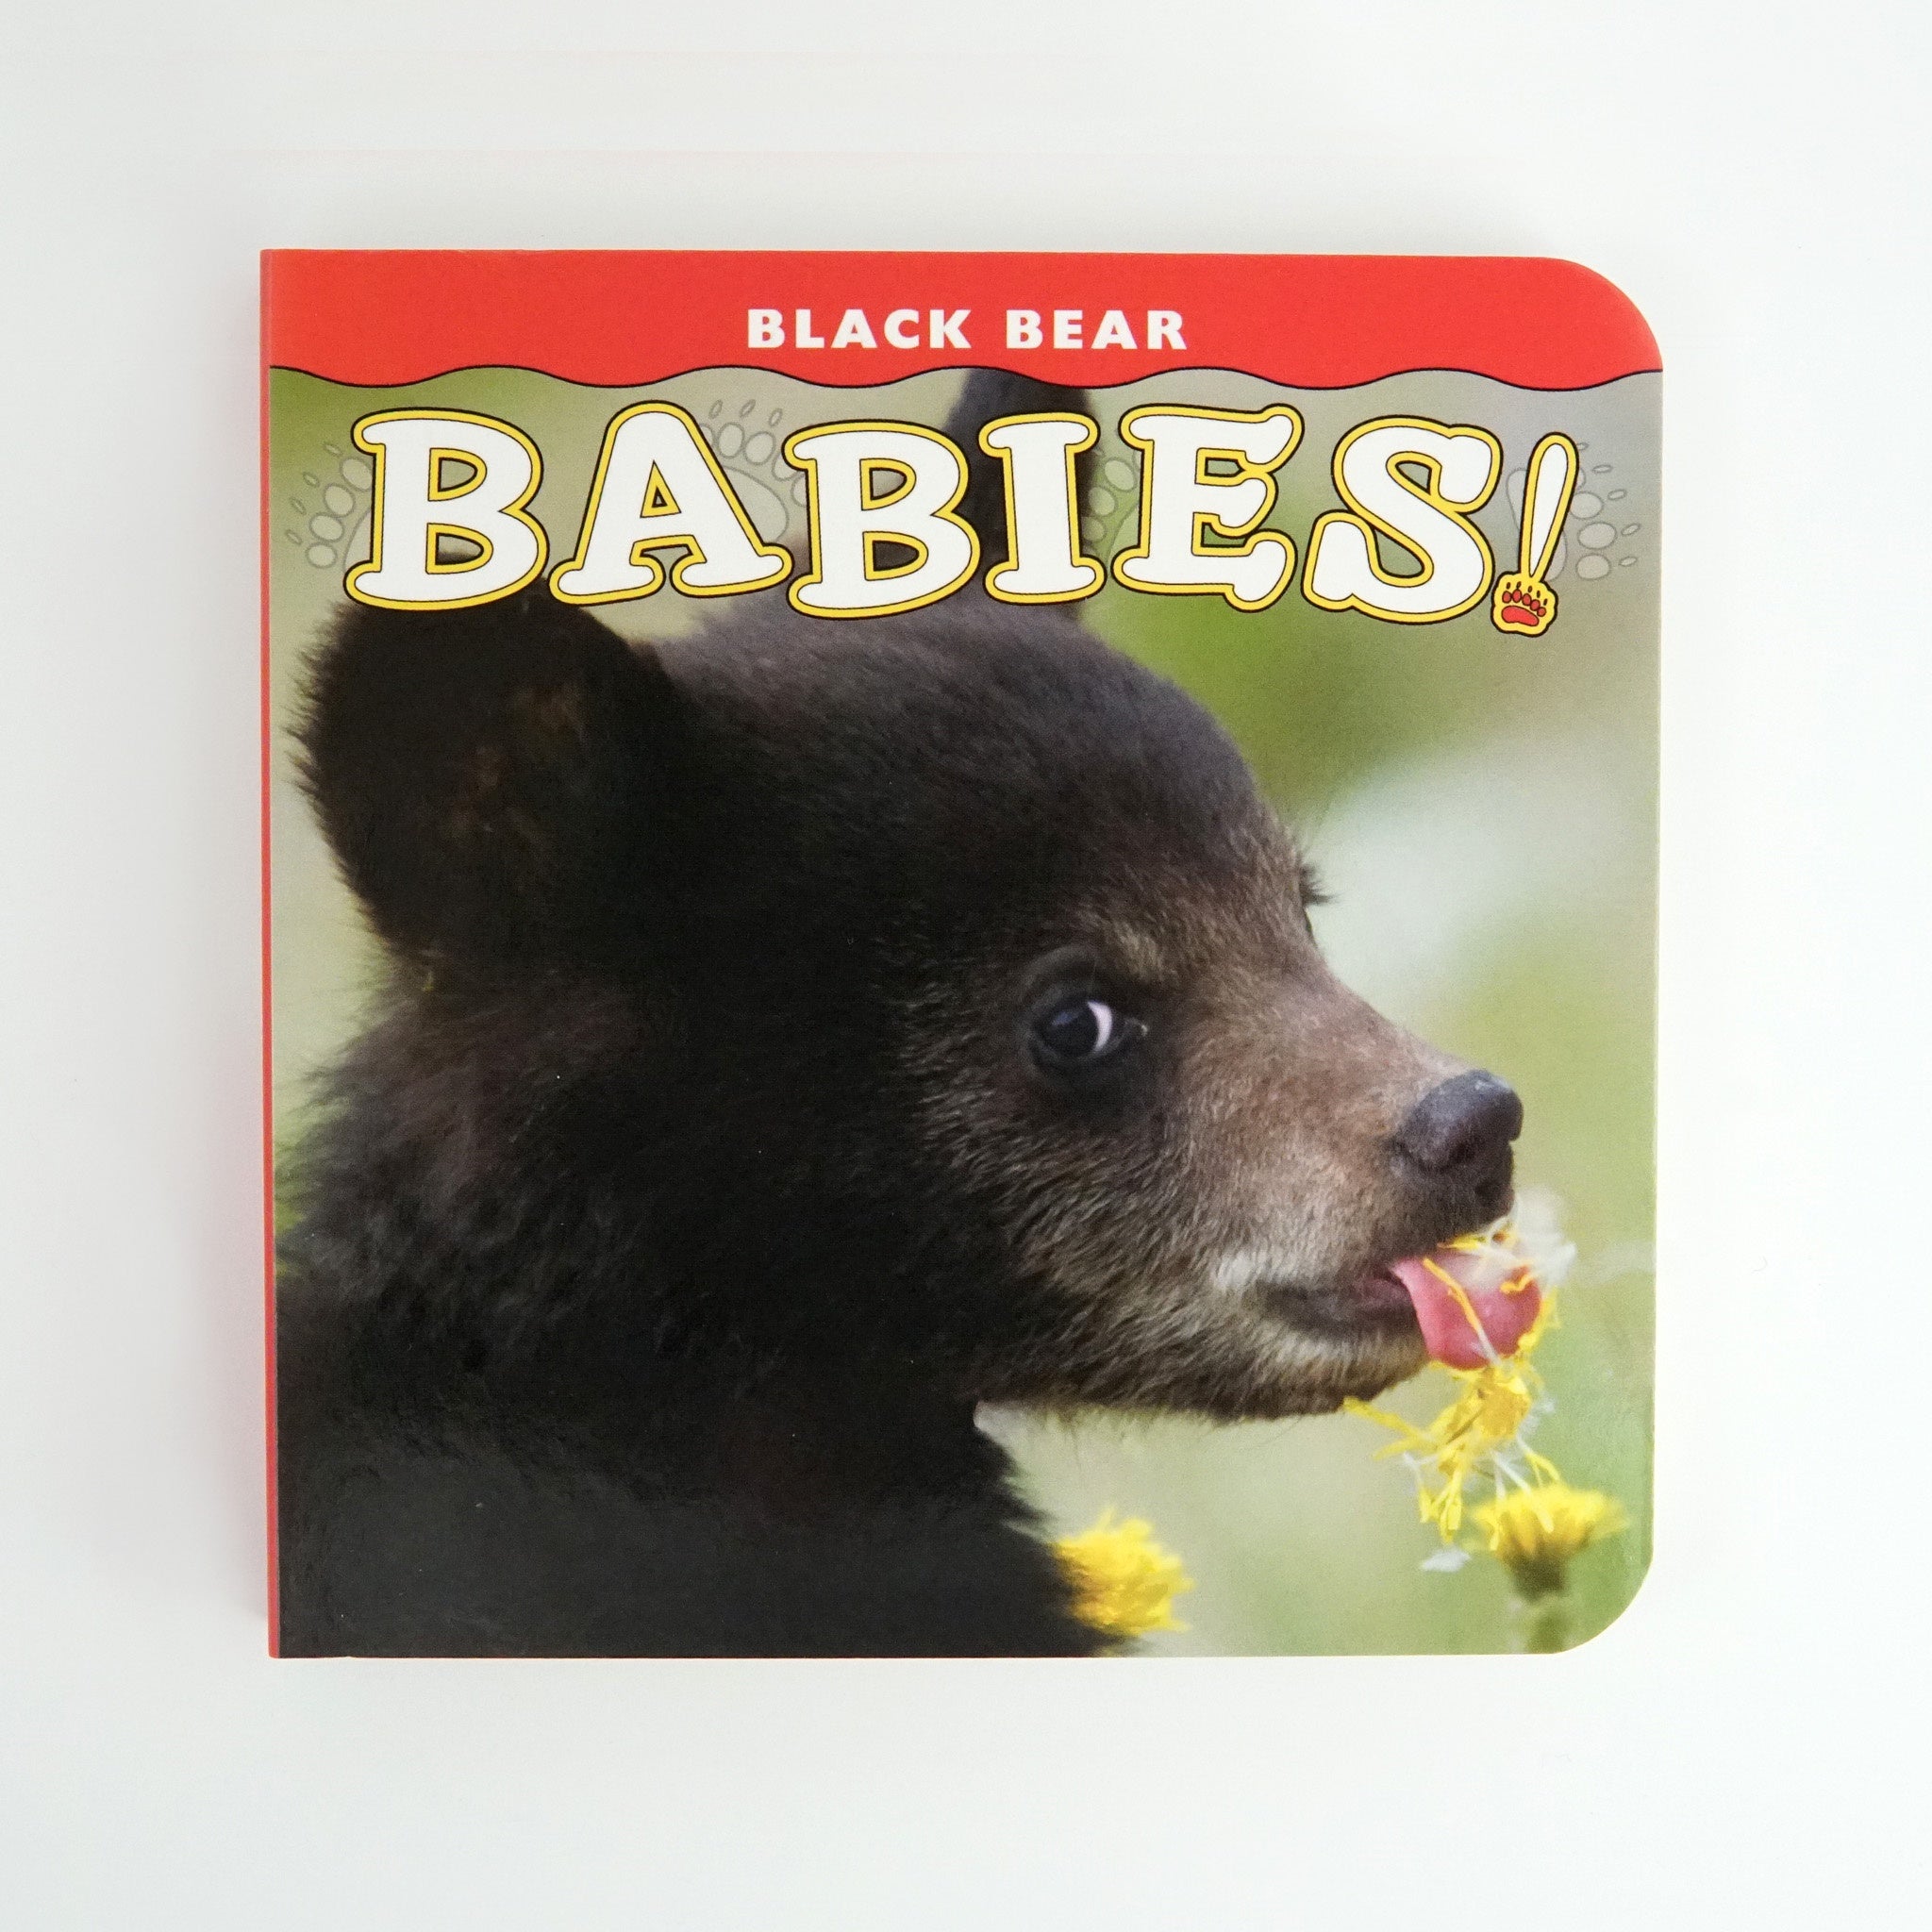 BK 20 BLACK BEAR BABIES! BY DONALD M. JONES #21033727 D2 MAR24